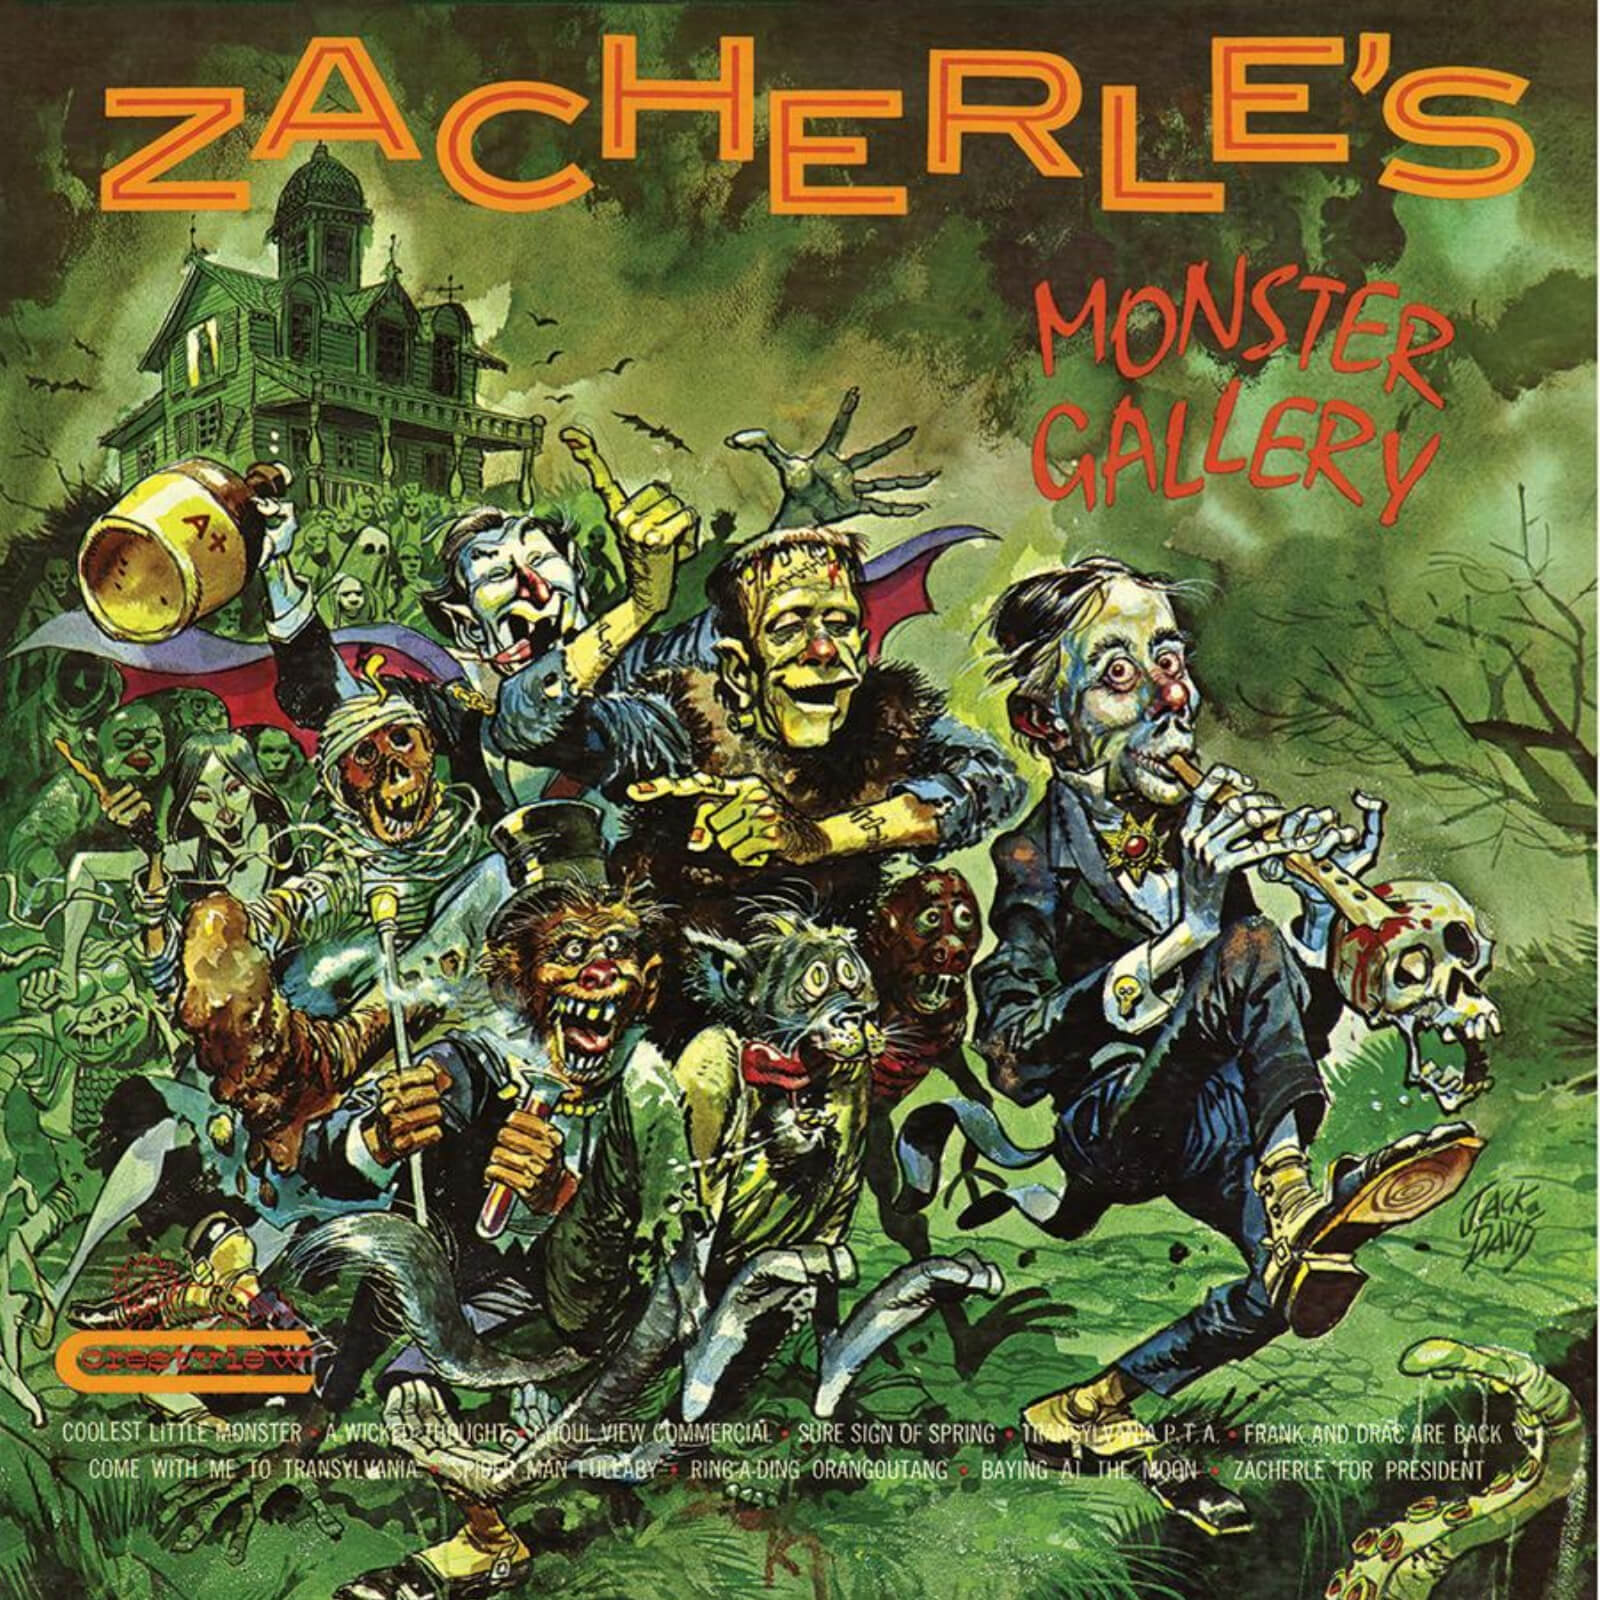 Zacherle's Monster Gallery Vinyl (Clear with Green Swirl)